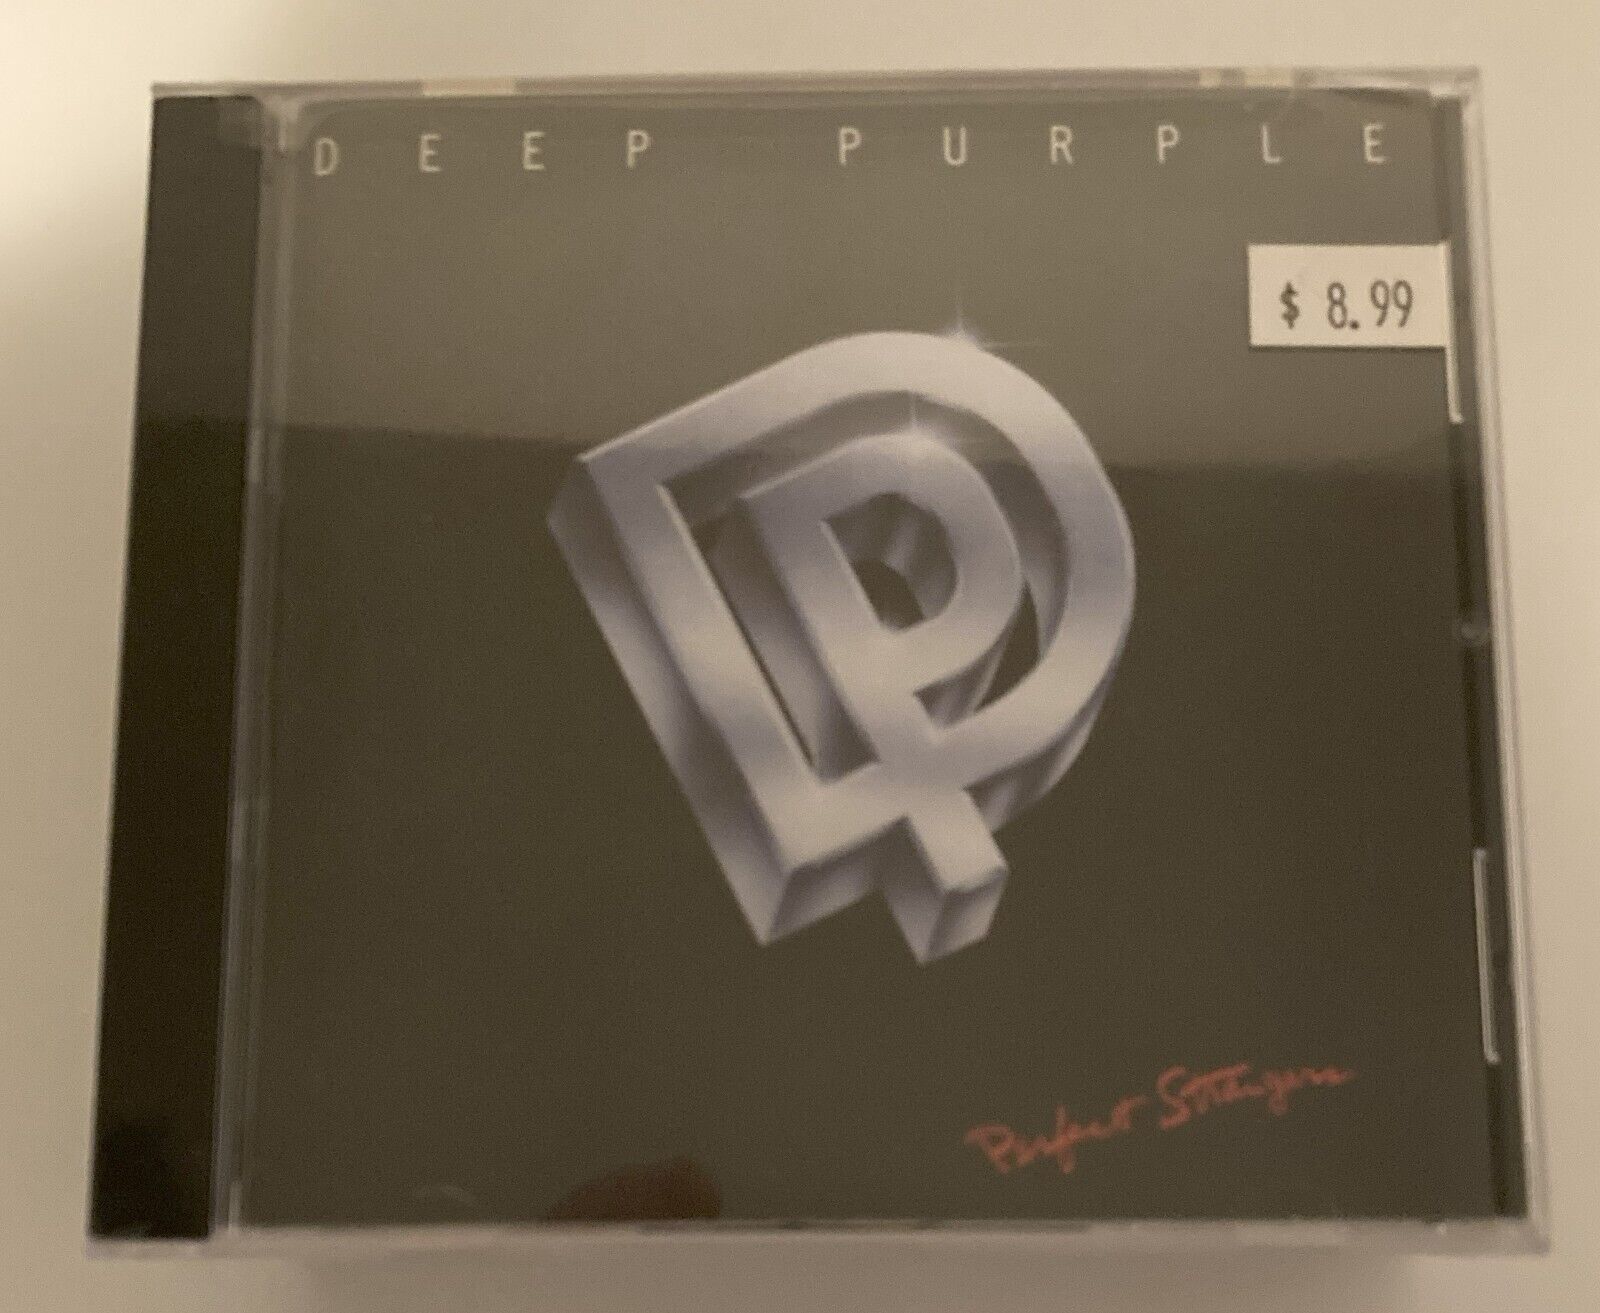 Perfect Strangers by Deep Purple [Bonus Track] (CD, 1999, Mercury) *NEW*